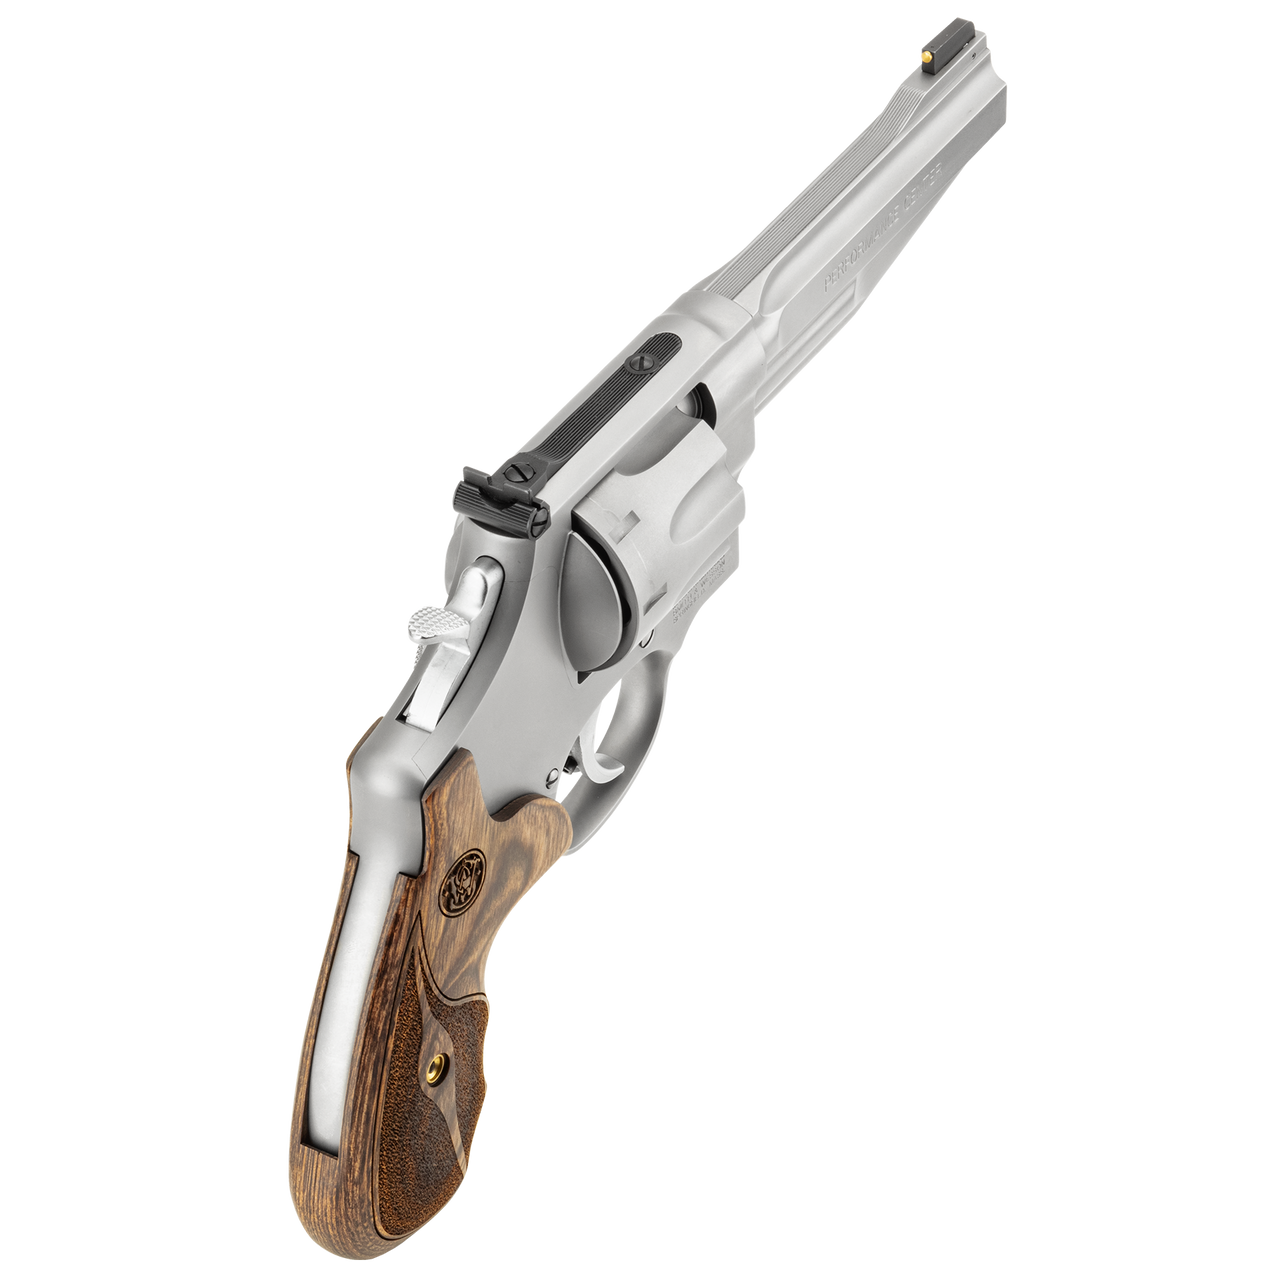 S&W Model 627 Performance Center .38/.357 5” Barrel Revolver – SKU 170210 – 8RD